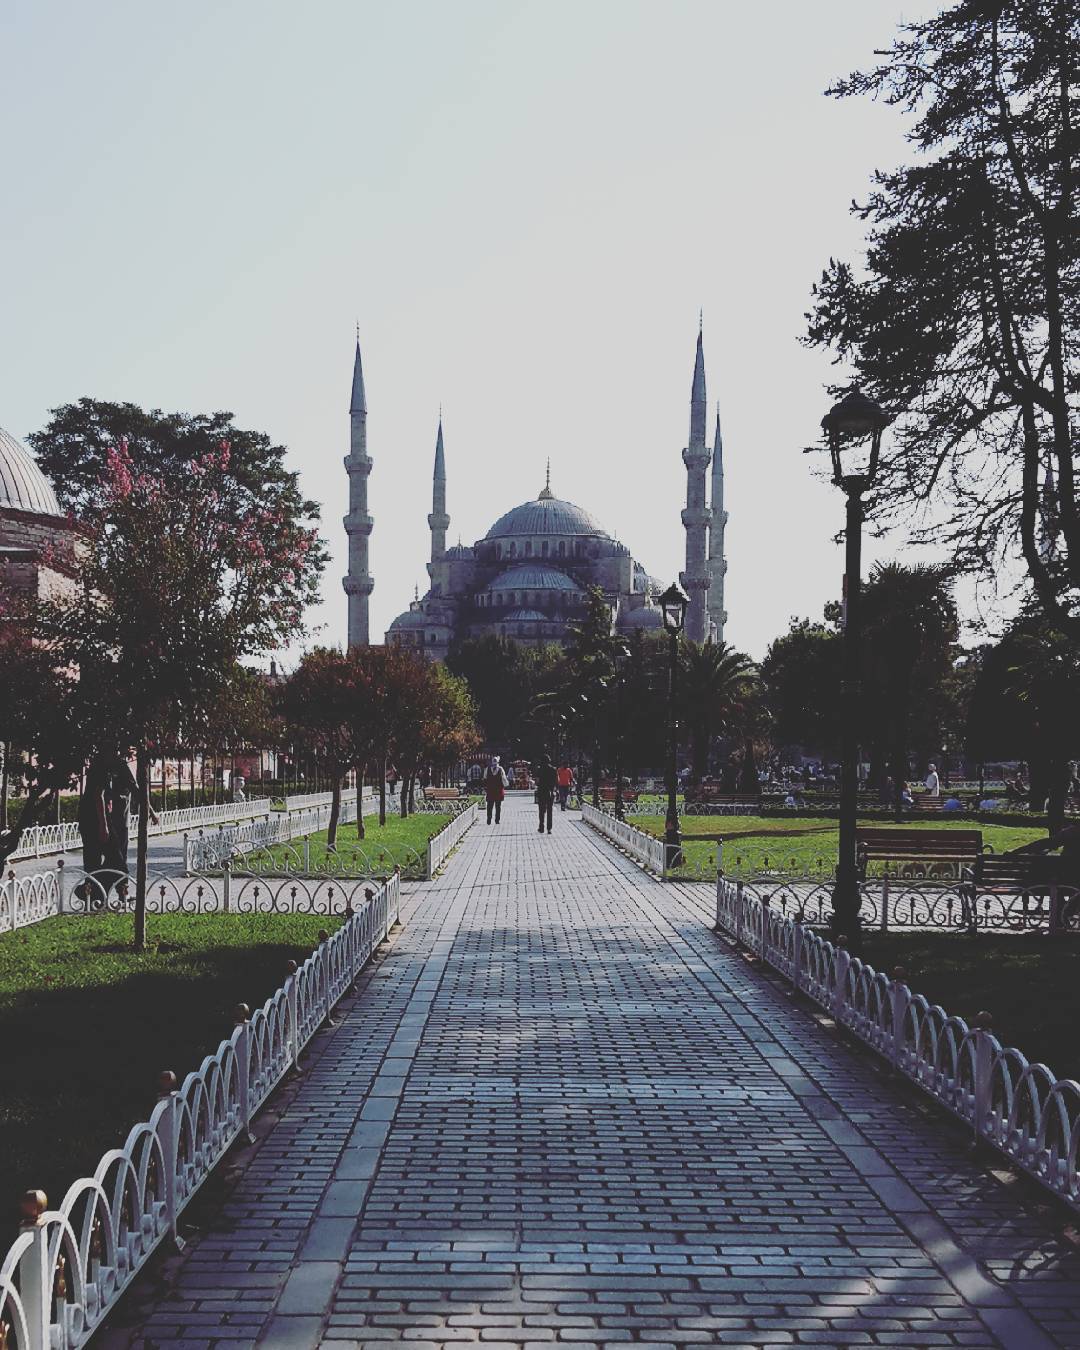 Enjoying #Istanbul  #turkey #sultanahmet #sultanahmetcamii #mosque #bluemosque